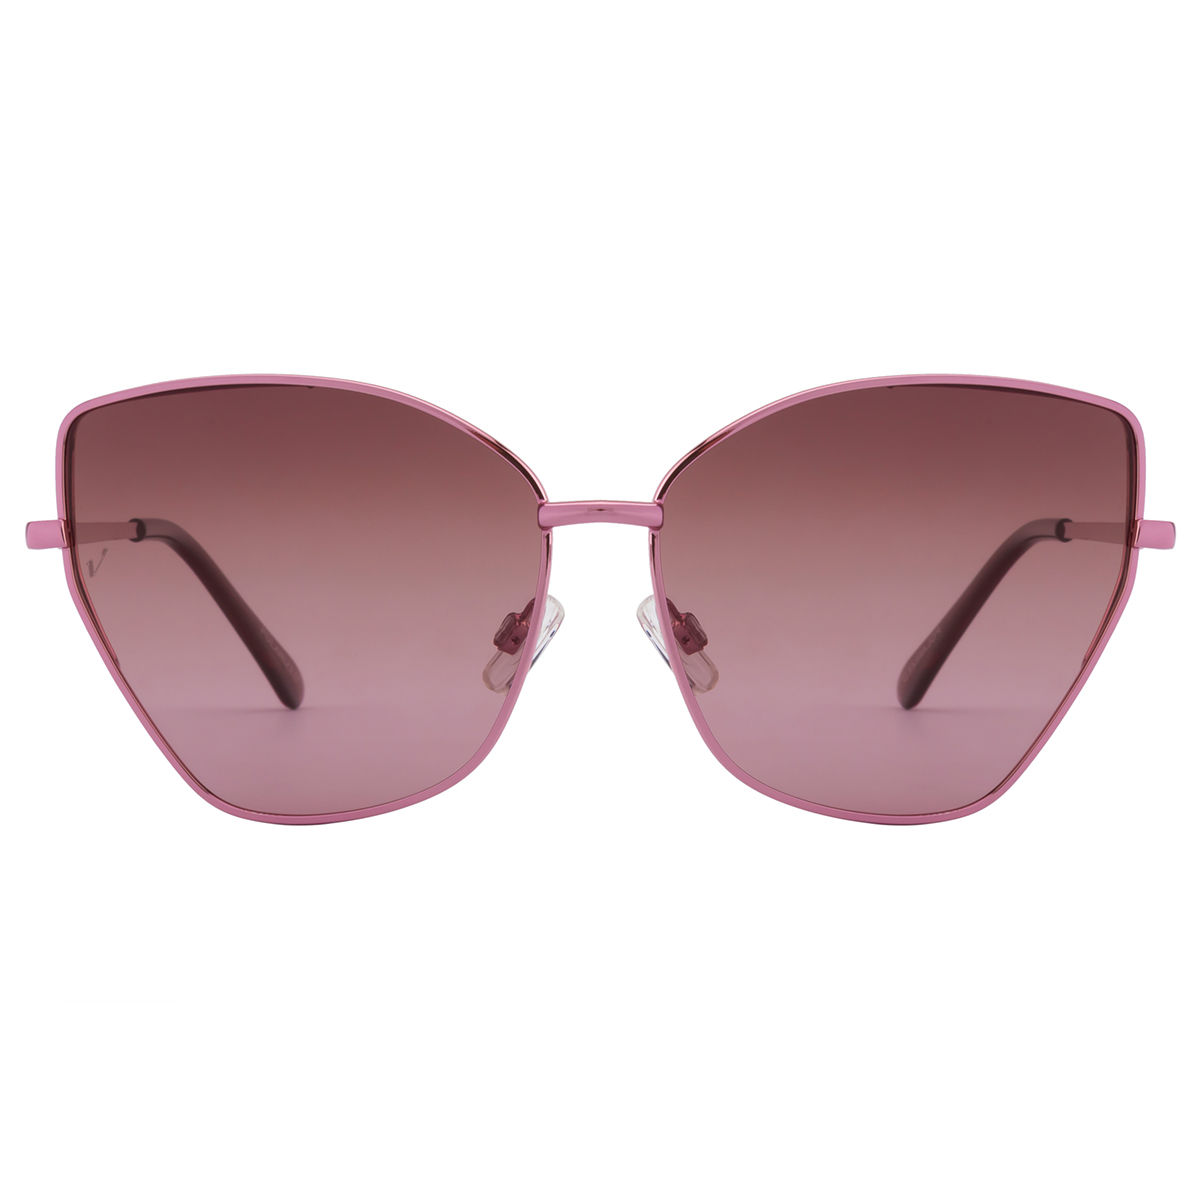 Top more than 130 velocity polarized sunglasses